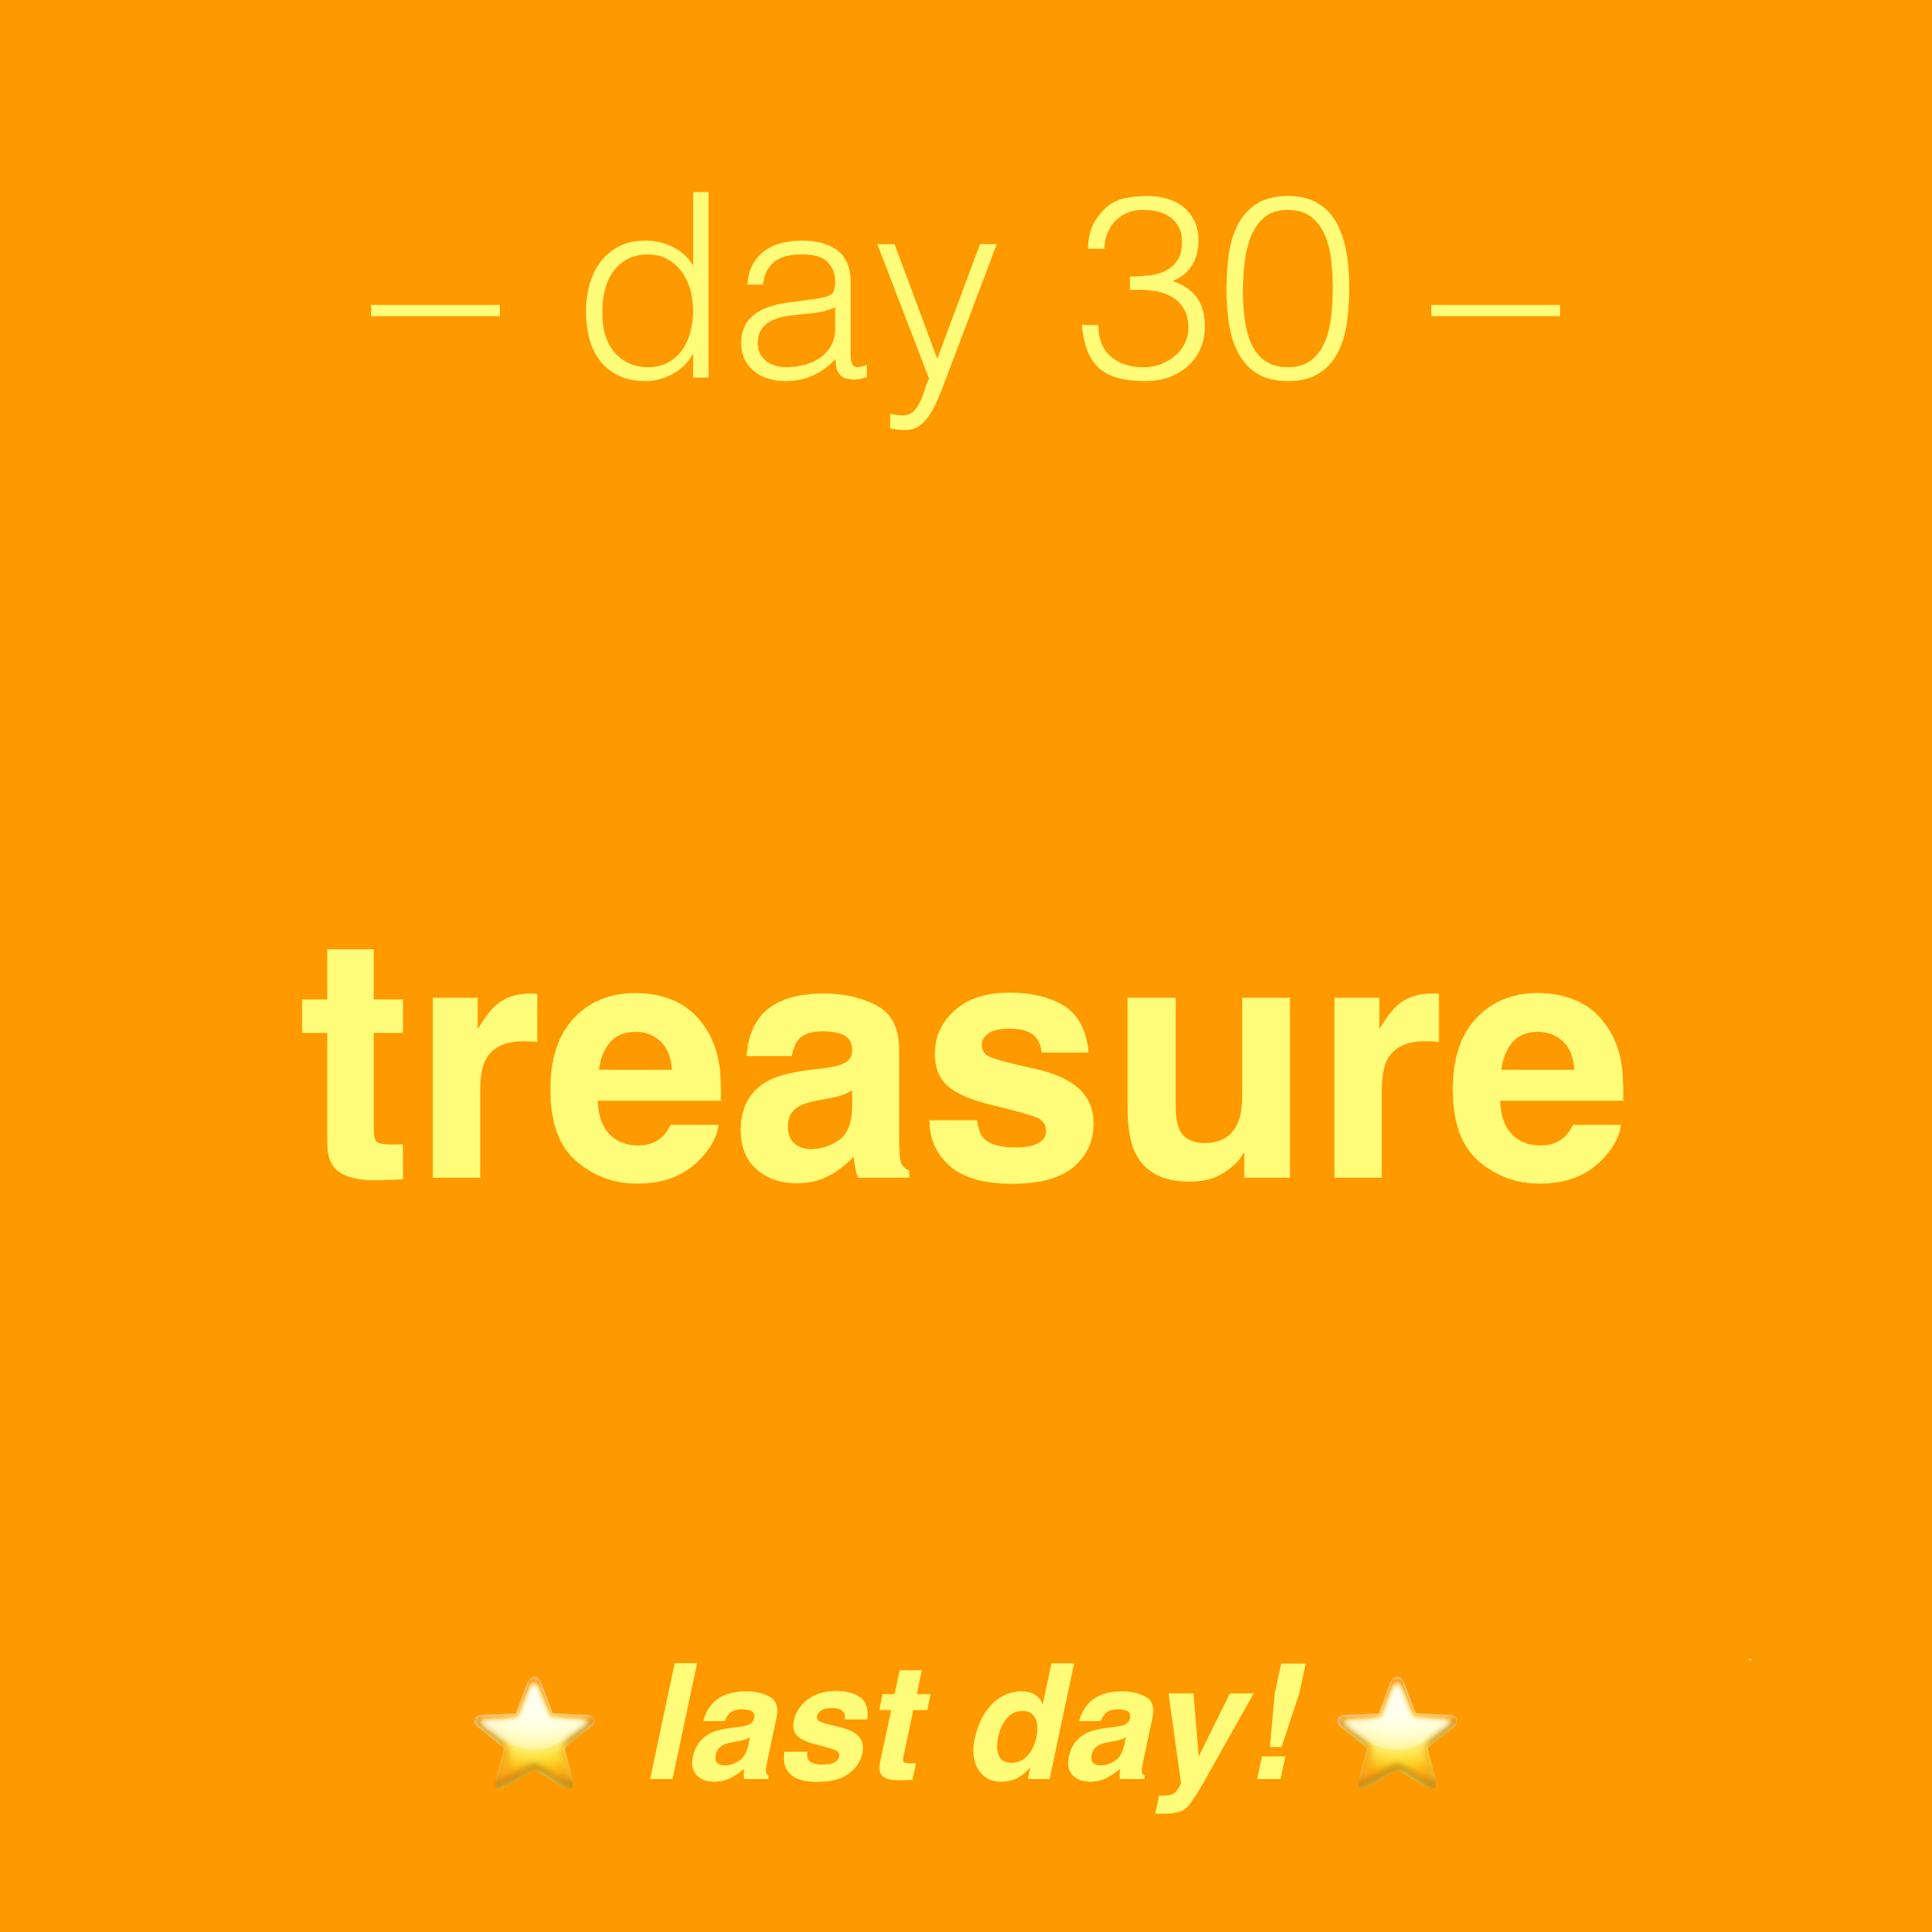 day 30 - treasure